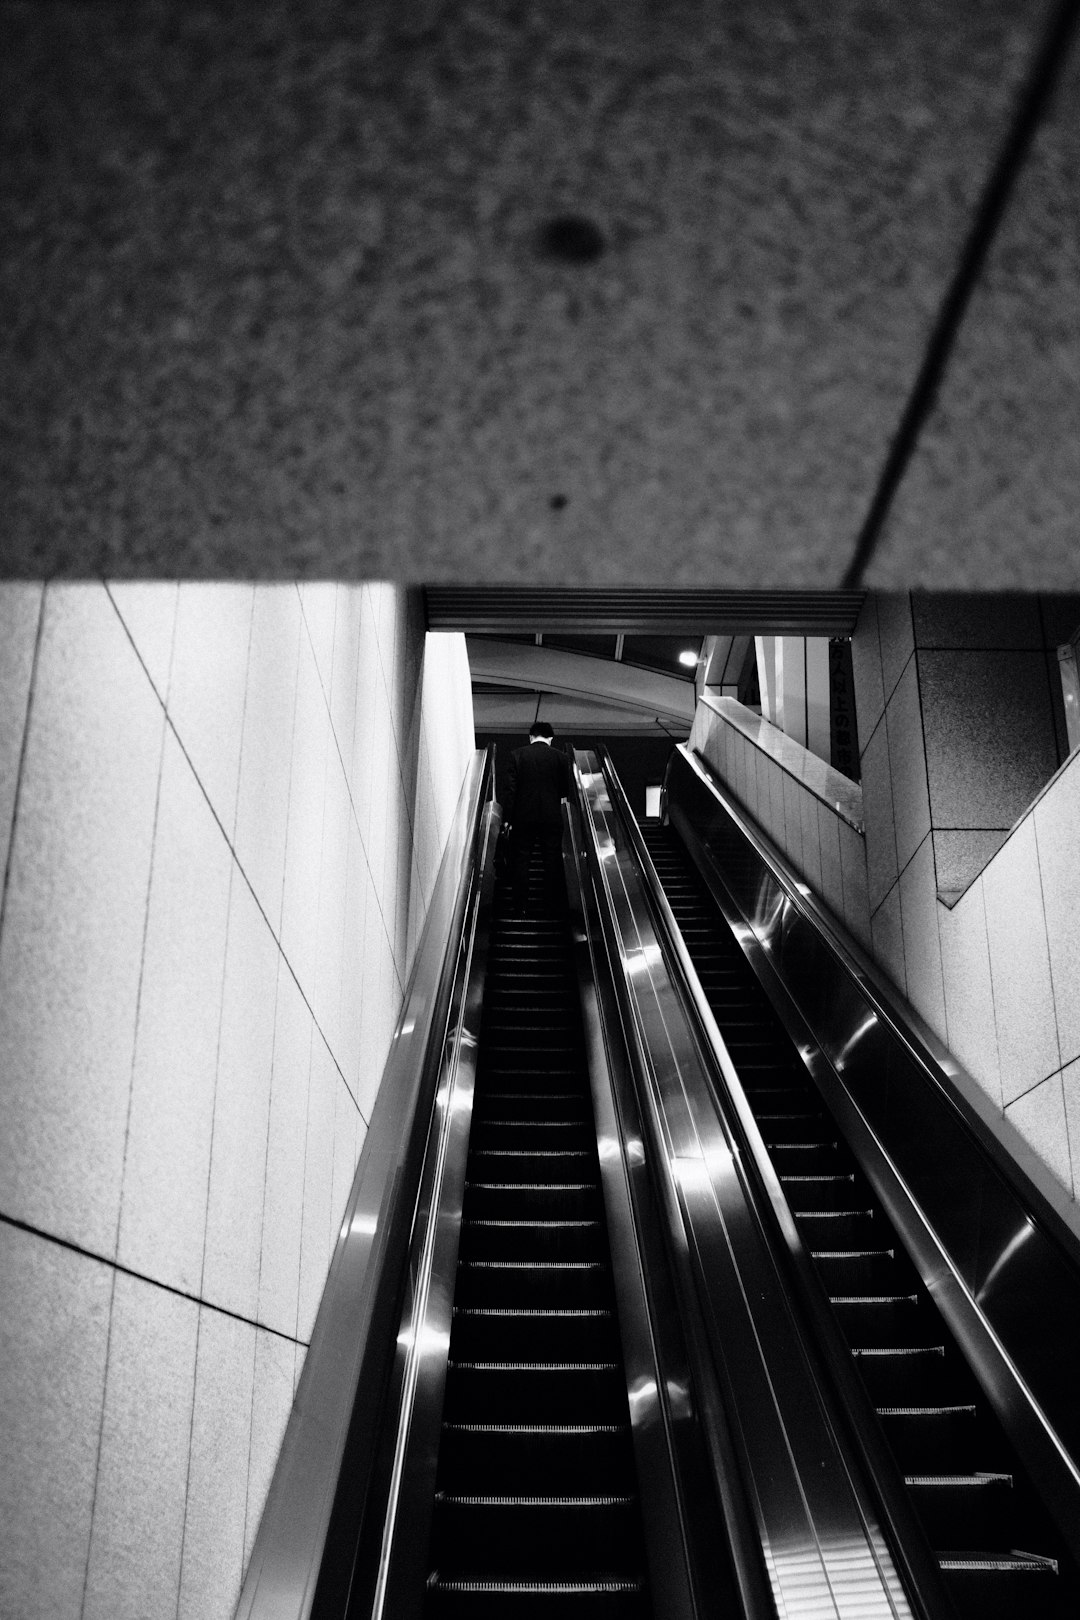 grayscale photo of escalator in building